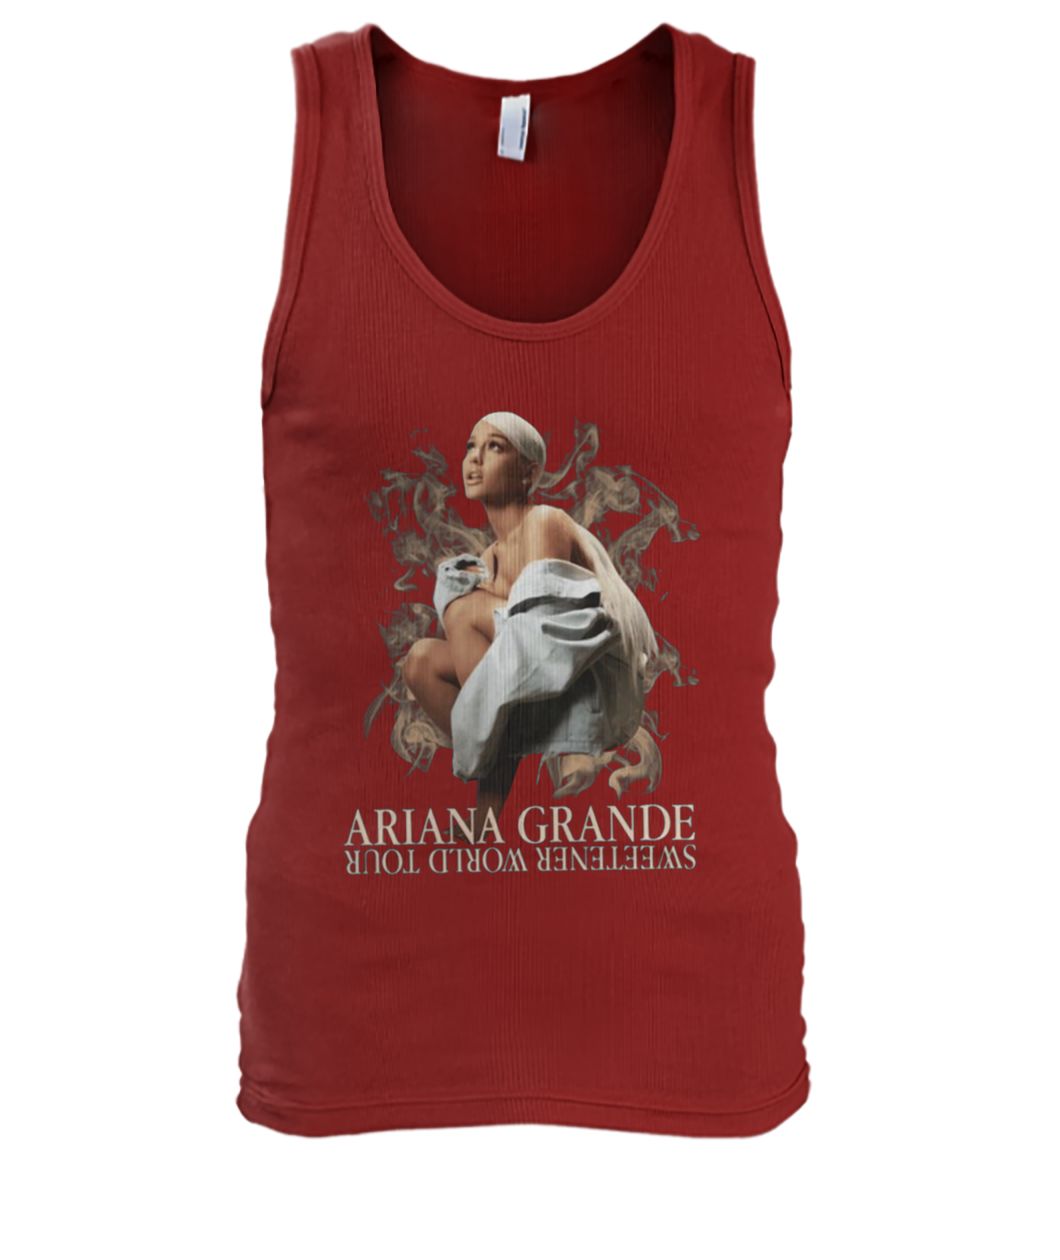 Ariana grande sweetener world tour men's tank top